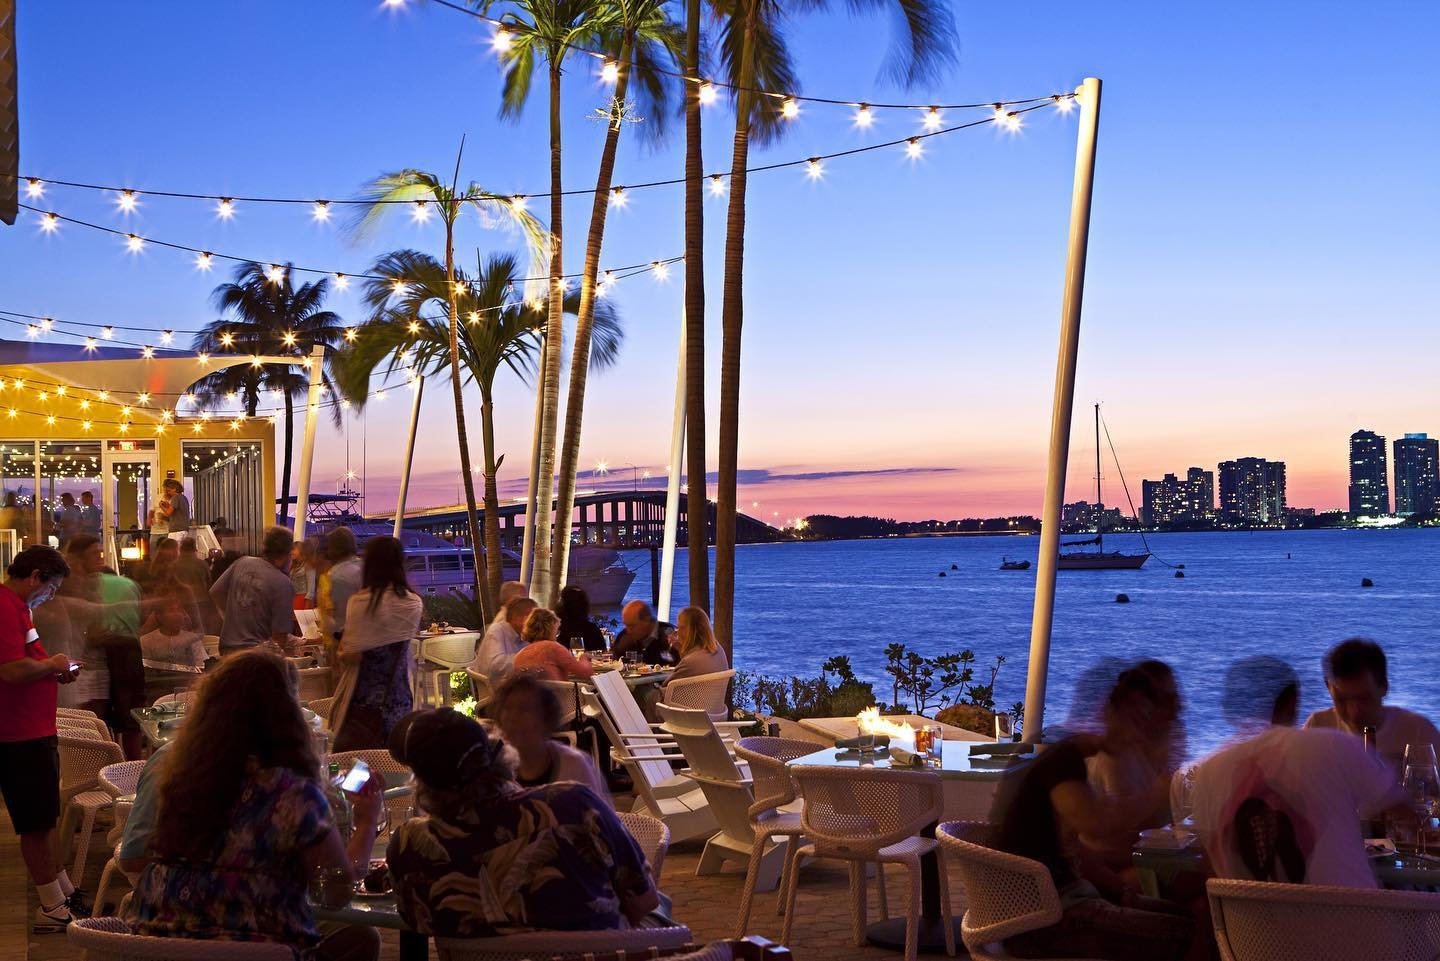 Best restaurants for a romantic dinner in Miami